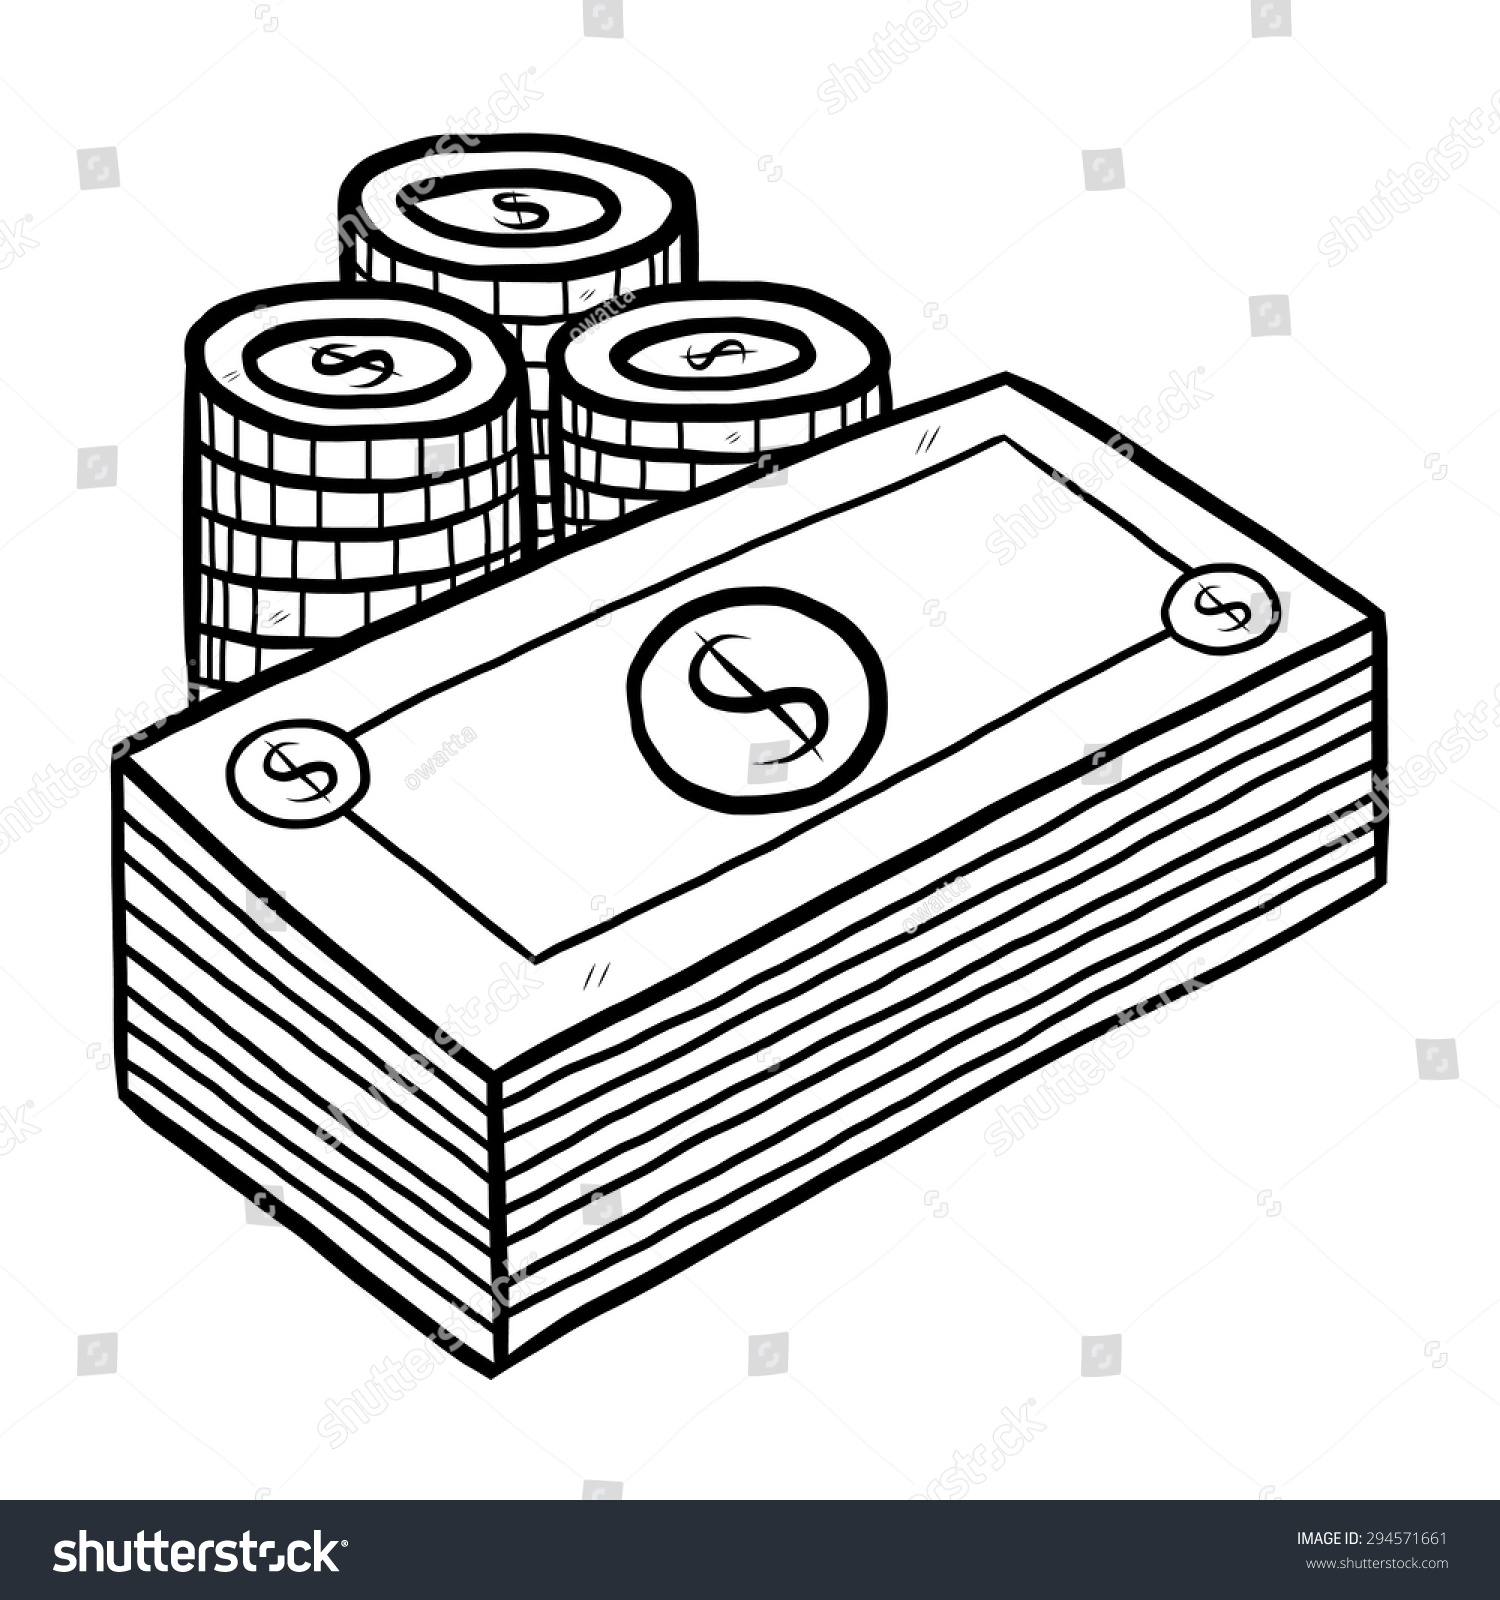 Money Banknote Coin Cartoon Vector Illustration Stock Vector 294571661 ...